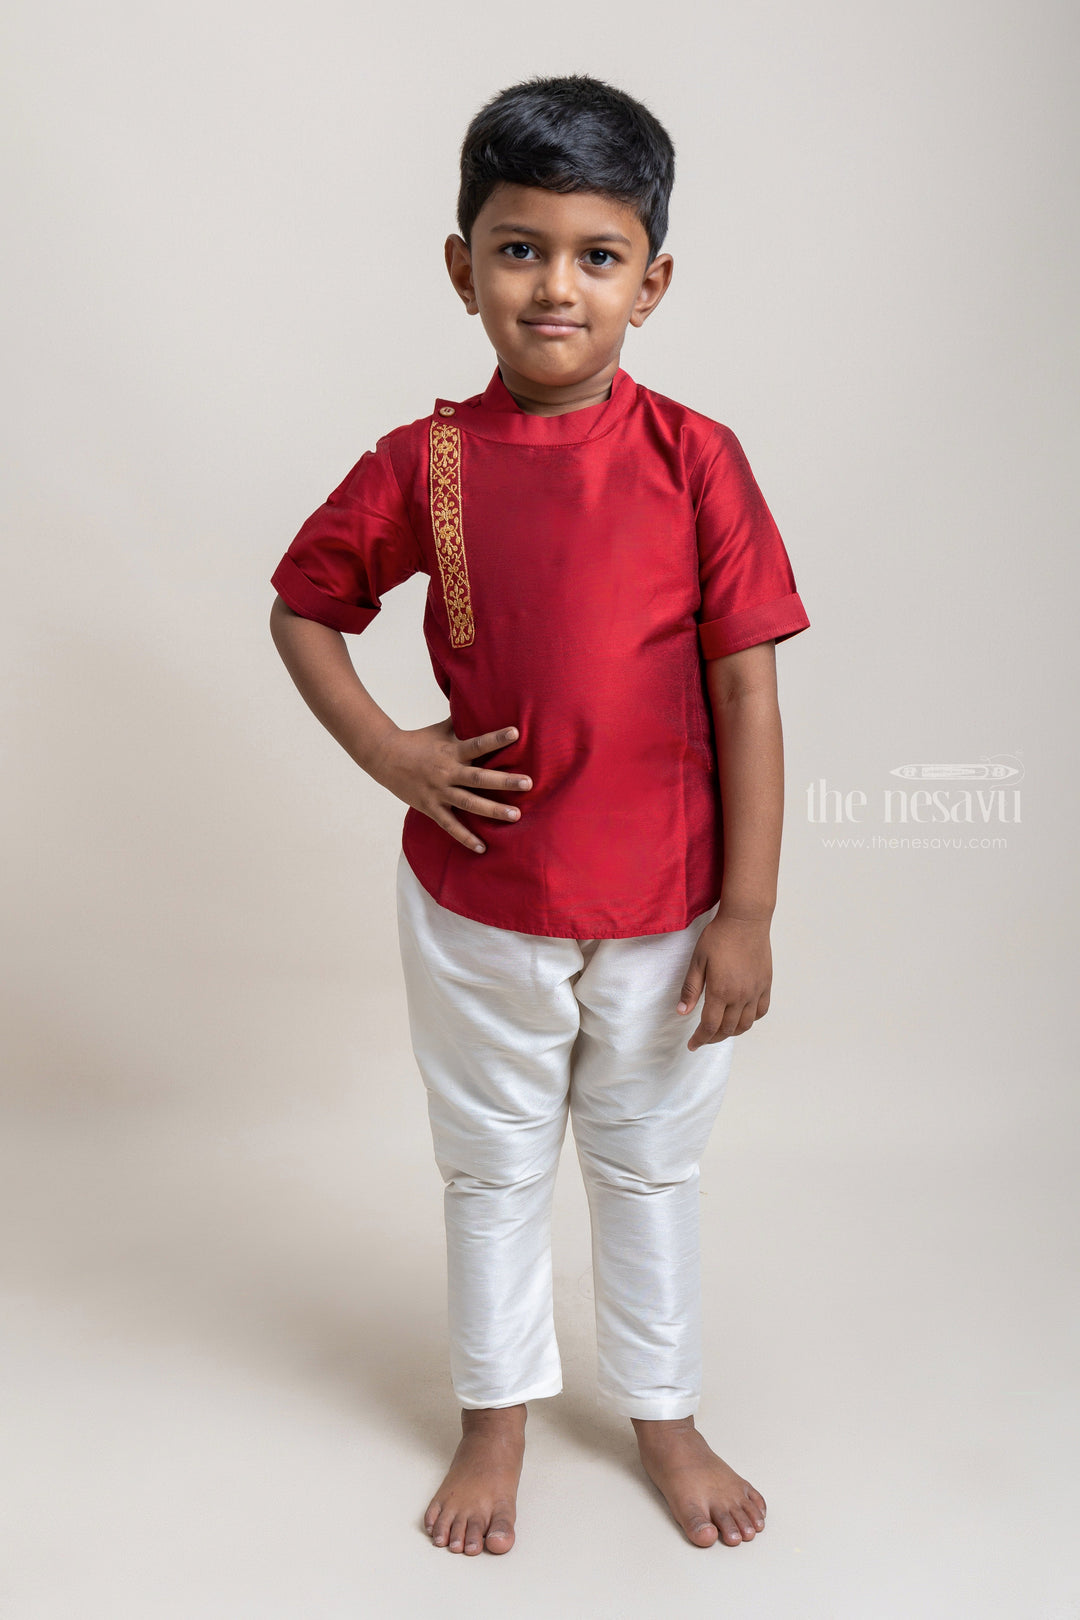 The Nesavu Boys Silk Shirt Gorgeous Red Soft Cotton Shirt For Little Boys Nesavu Ethnic Cotton Shirts For Boys | Premium Boys Wear | The Nesavu